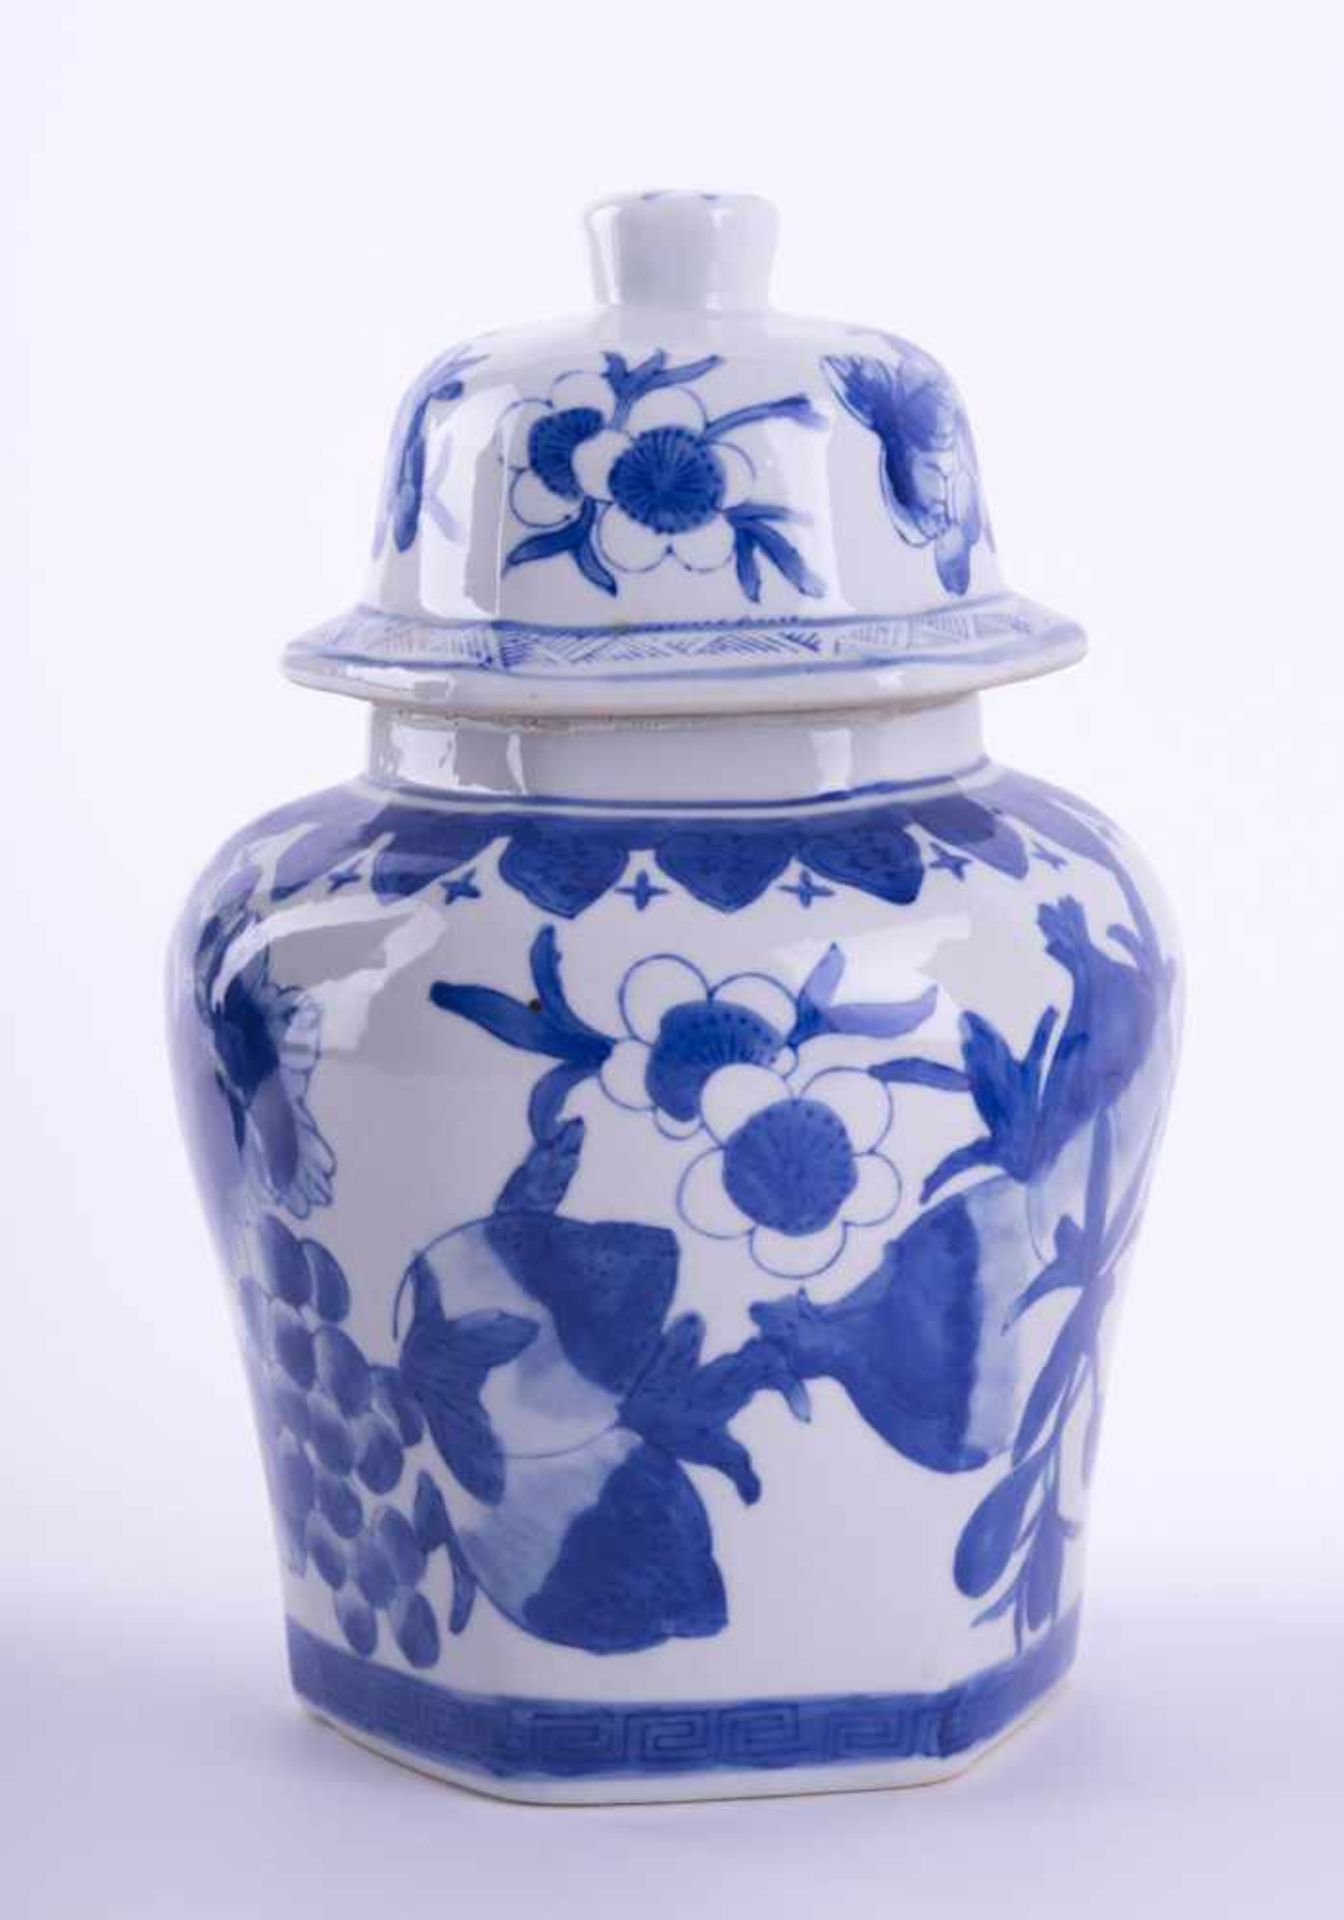 Vase China 20. Jhd. / Vase, China 20th century H: 26 cm height: 26 cm